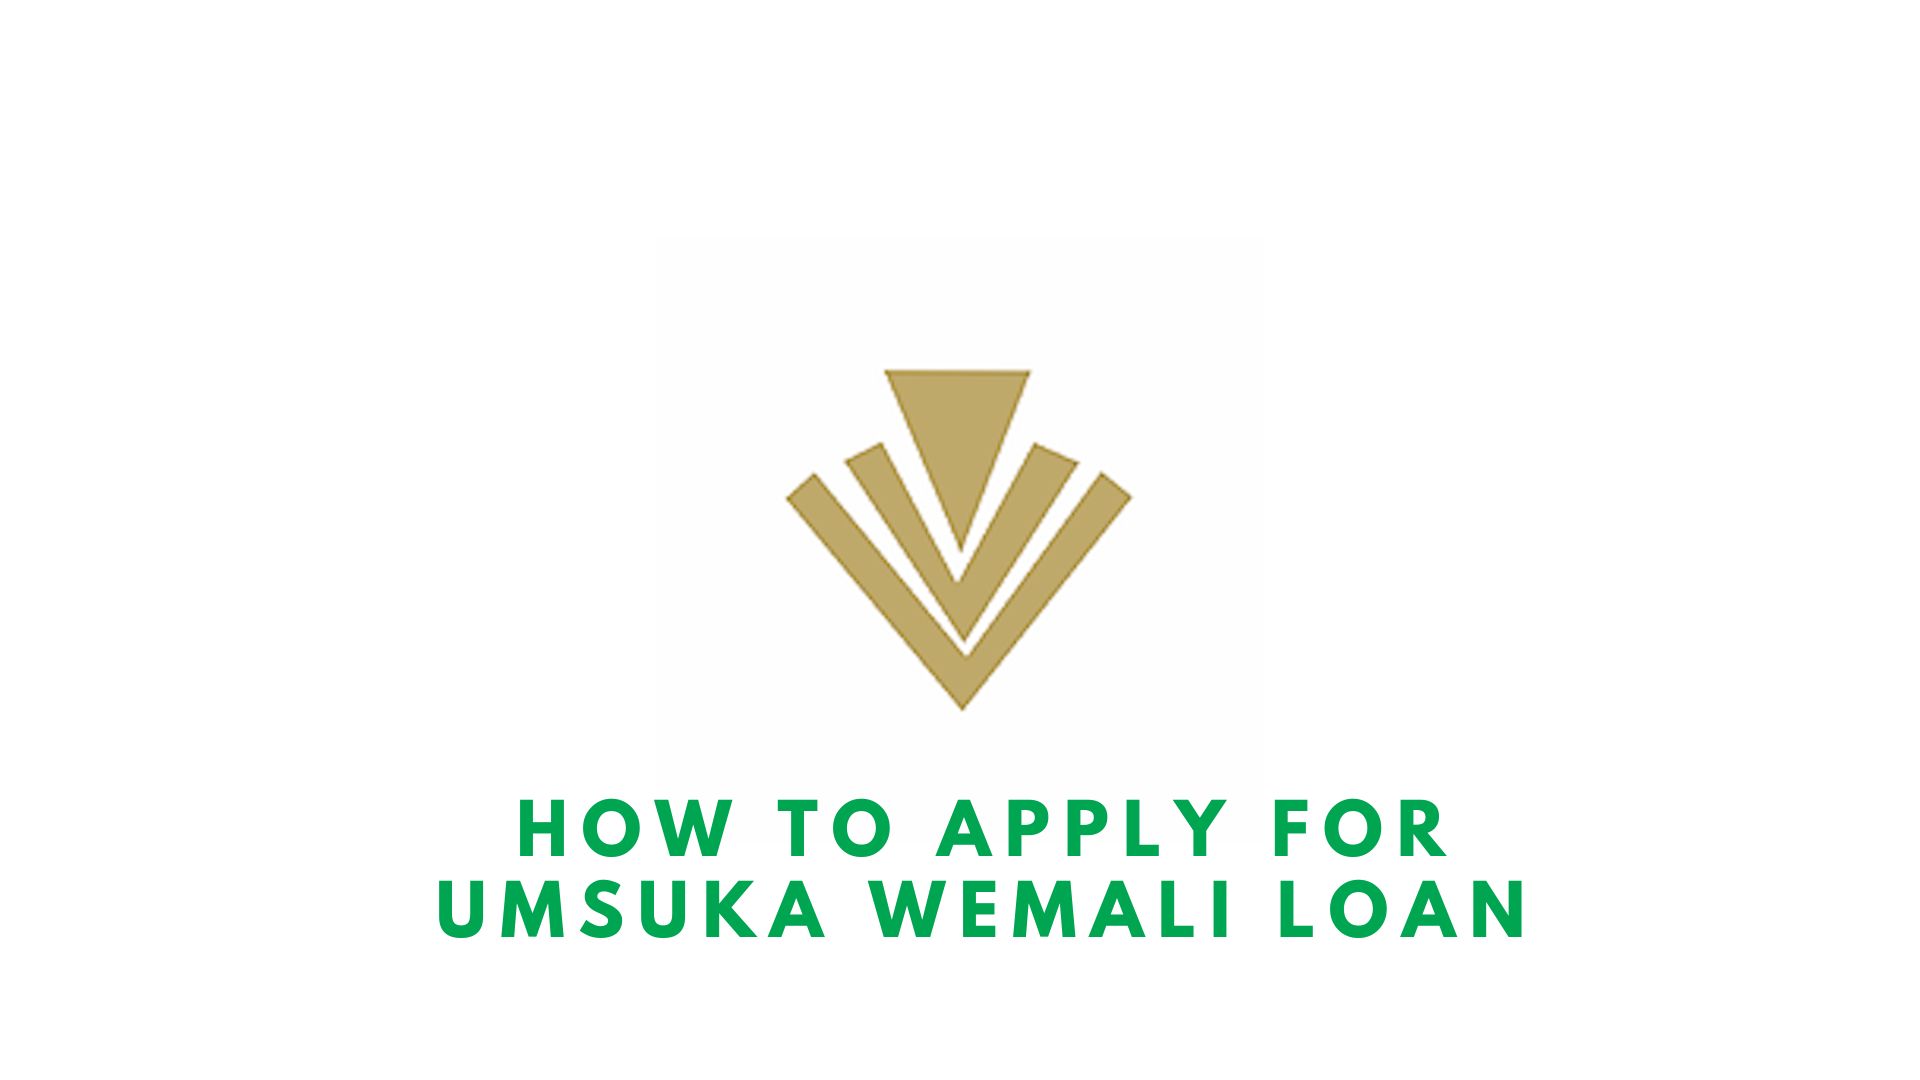 Umsuka Wemali Loan